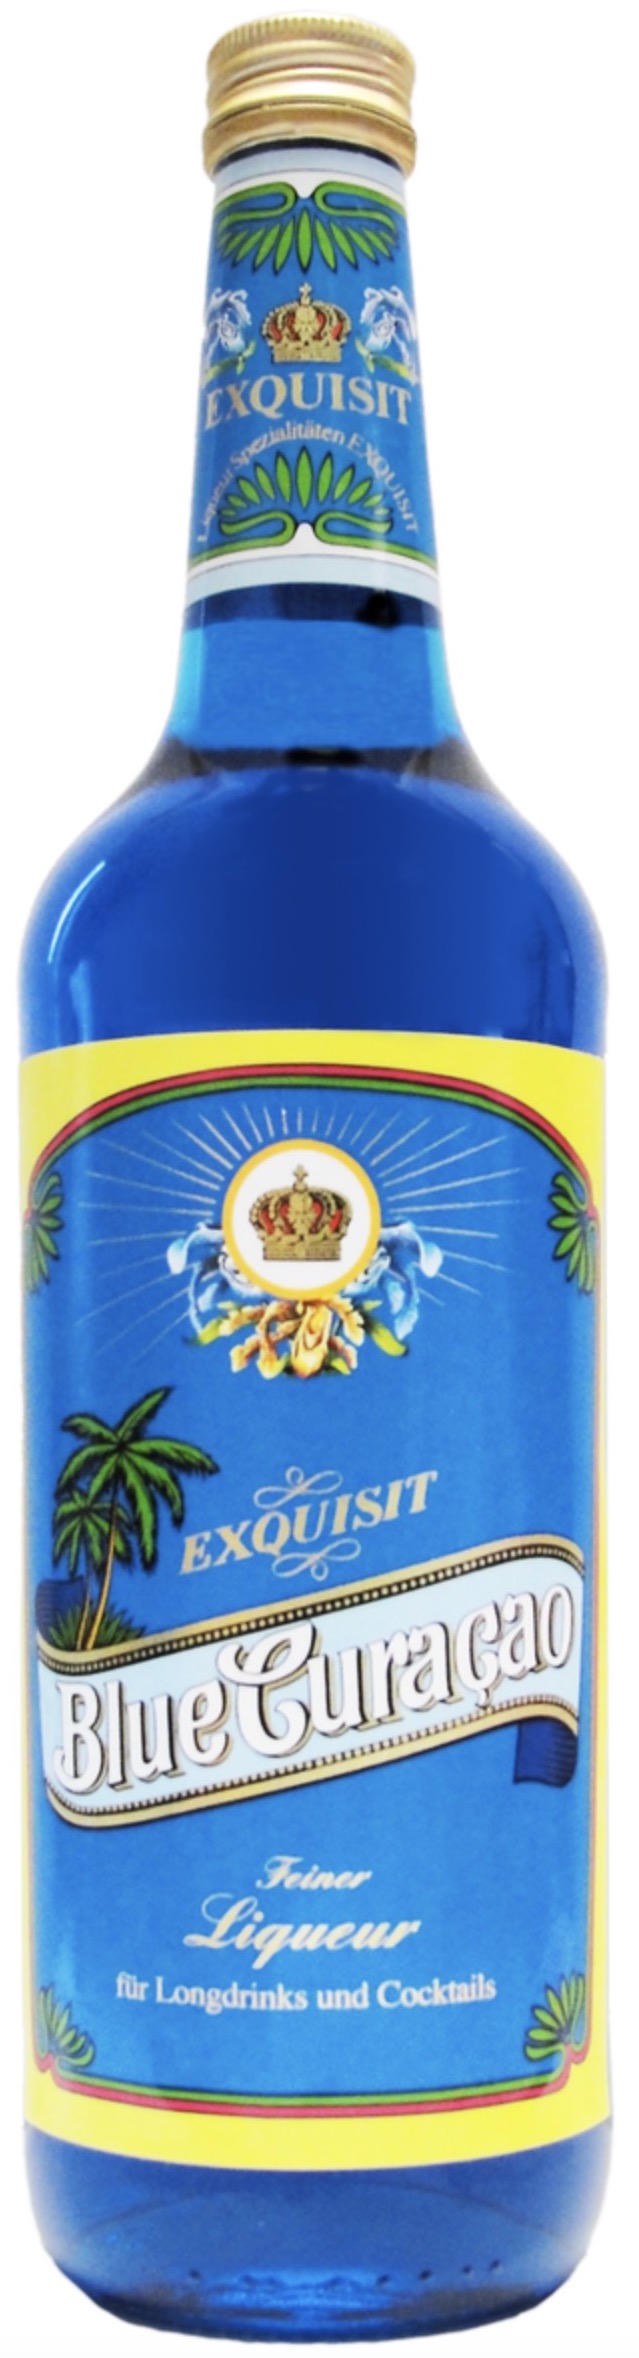 Rauter Exquisit Blue Curacao 20% 0,7L